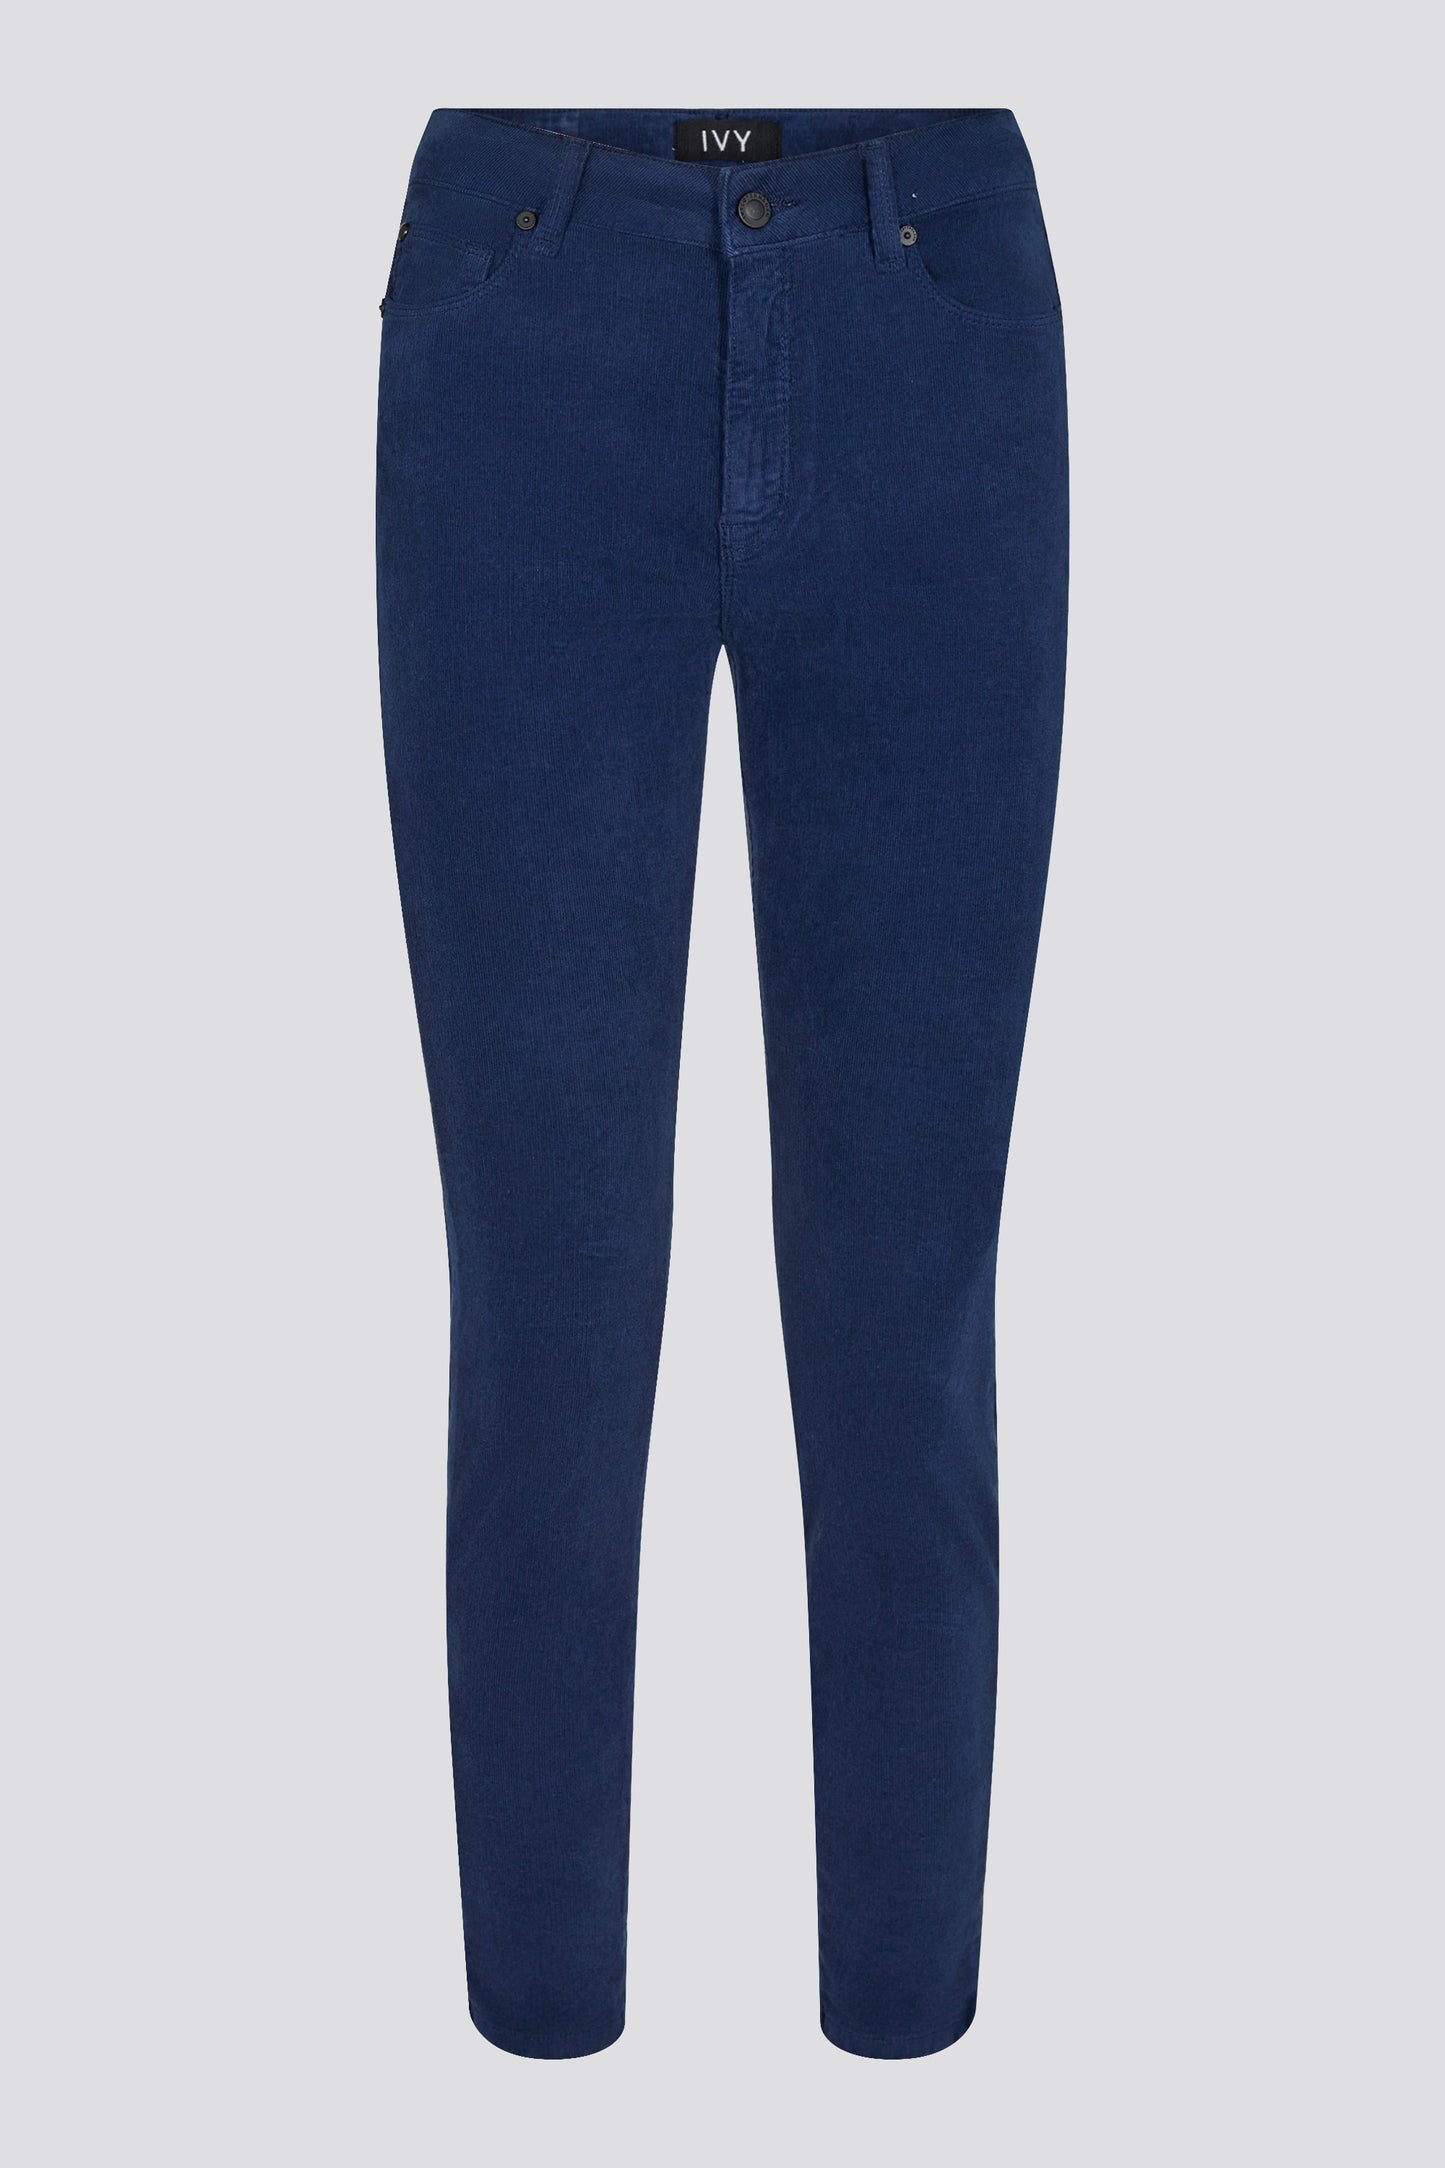 IVY Copenhagen IVY-Alexa Jeans Baby Cord Jeans & Pants 517 Midnight Blue